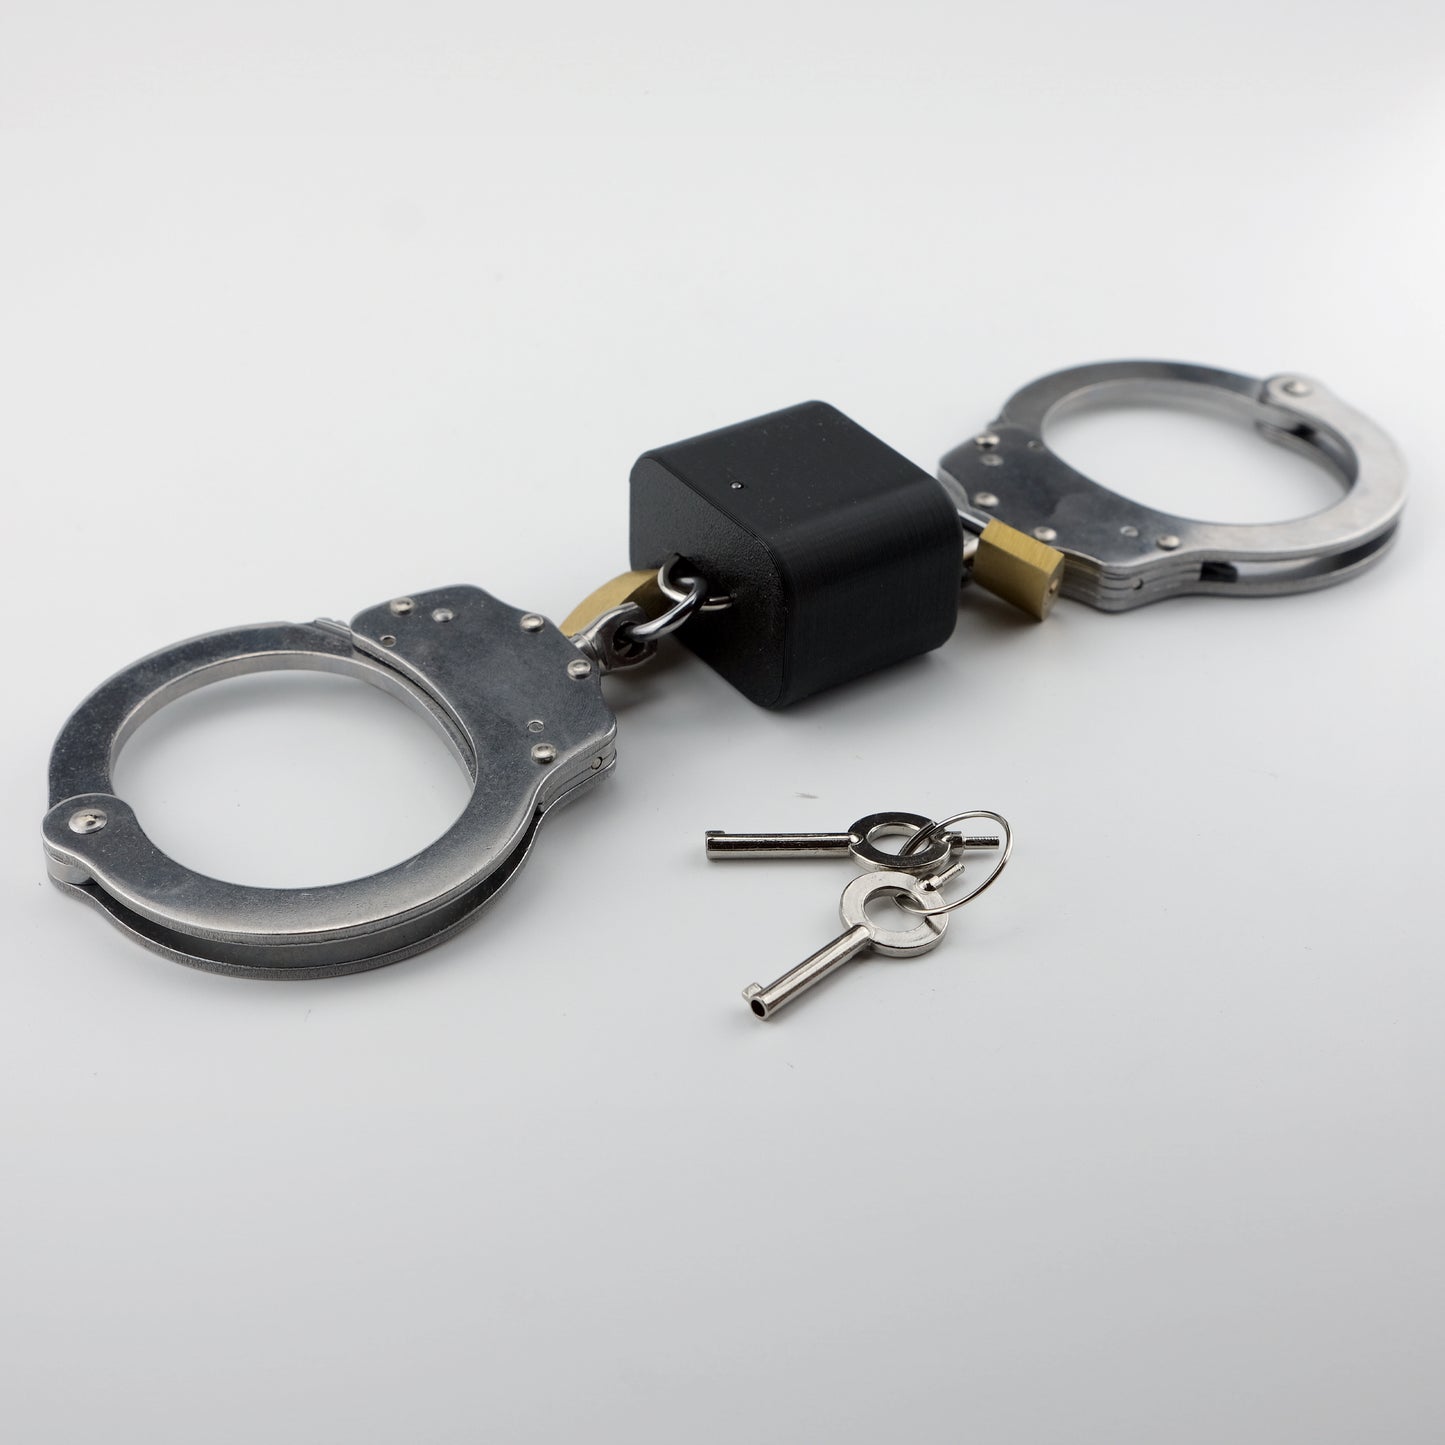 Selfbondage Starter kit - icelock + handcuffs